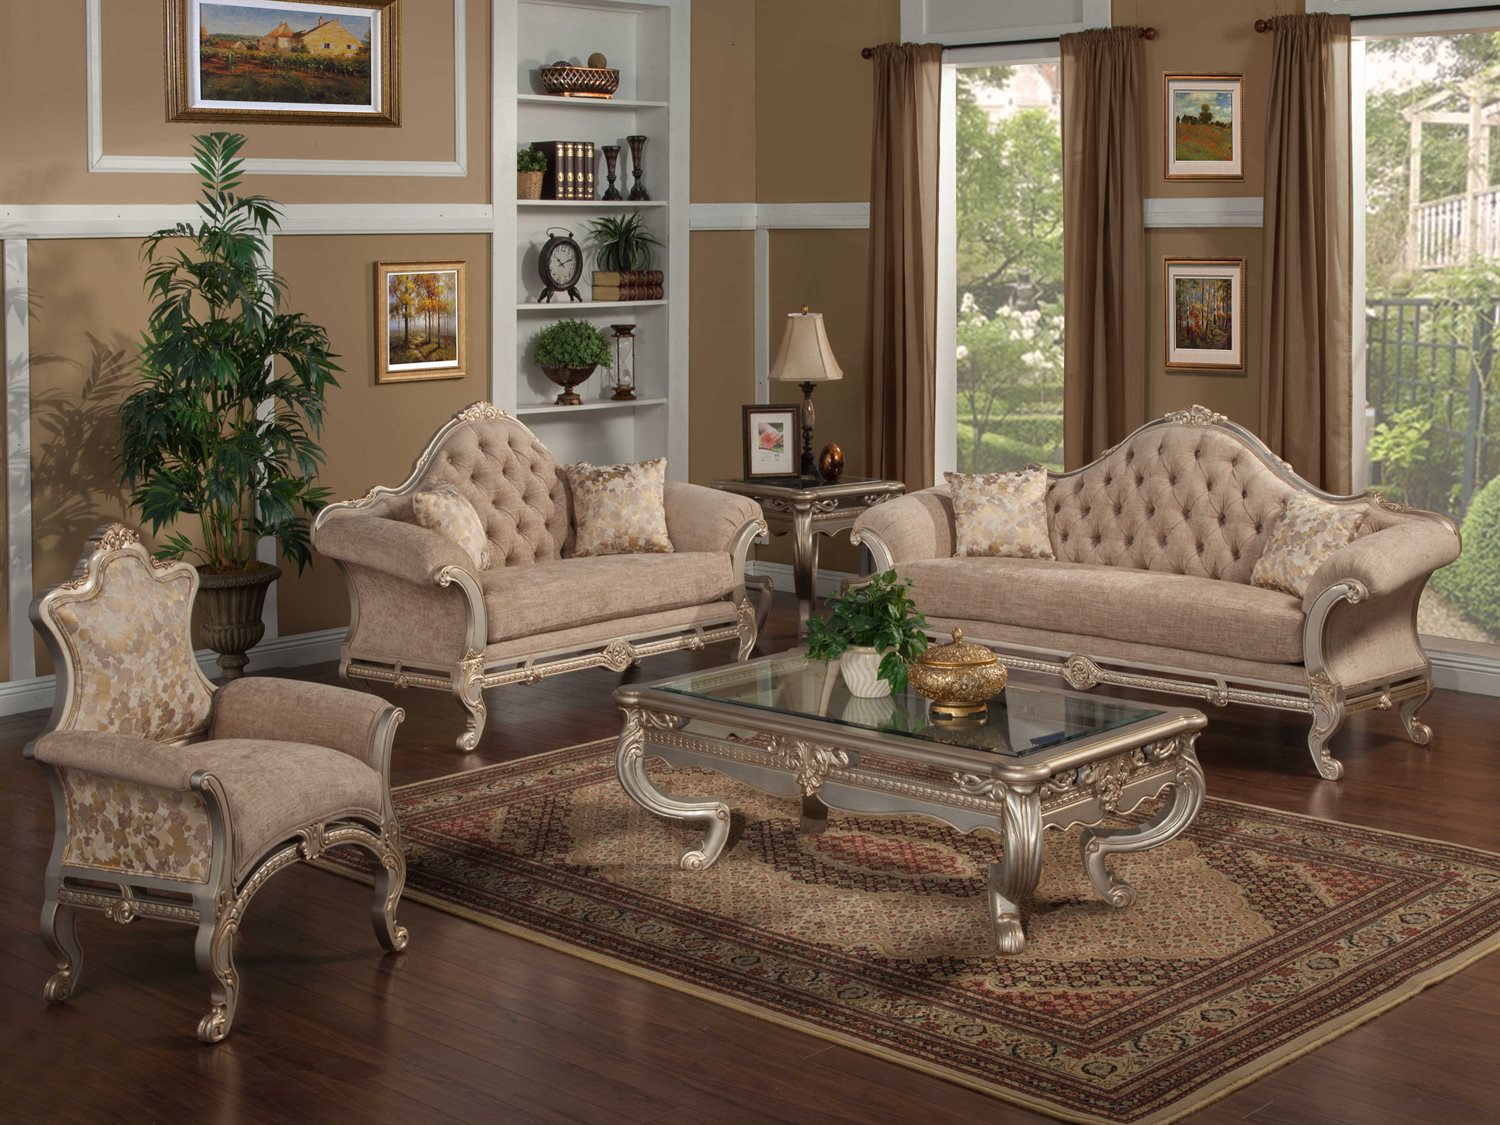 benetti's italia living room furniture